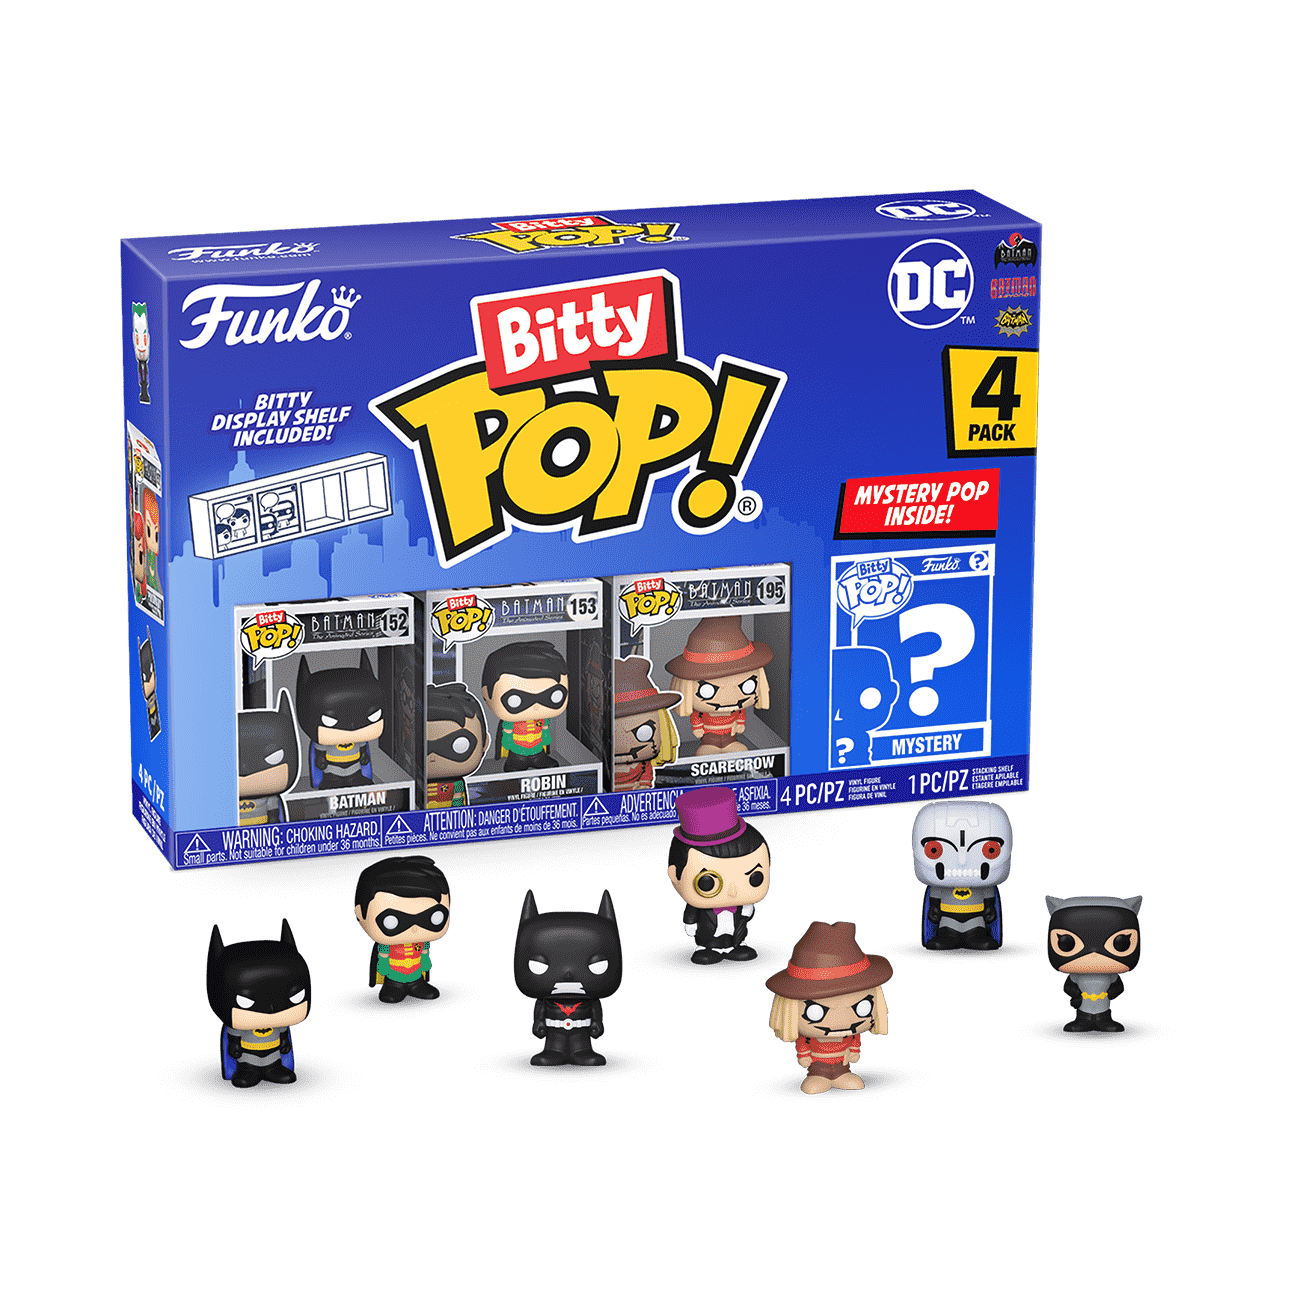 Buy Bitty Pop! DC Comics 4-Pack Series 1 at Funko.